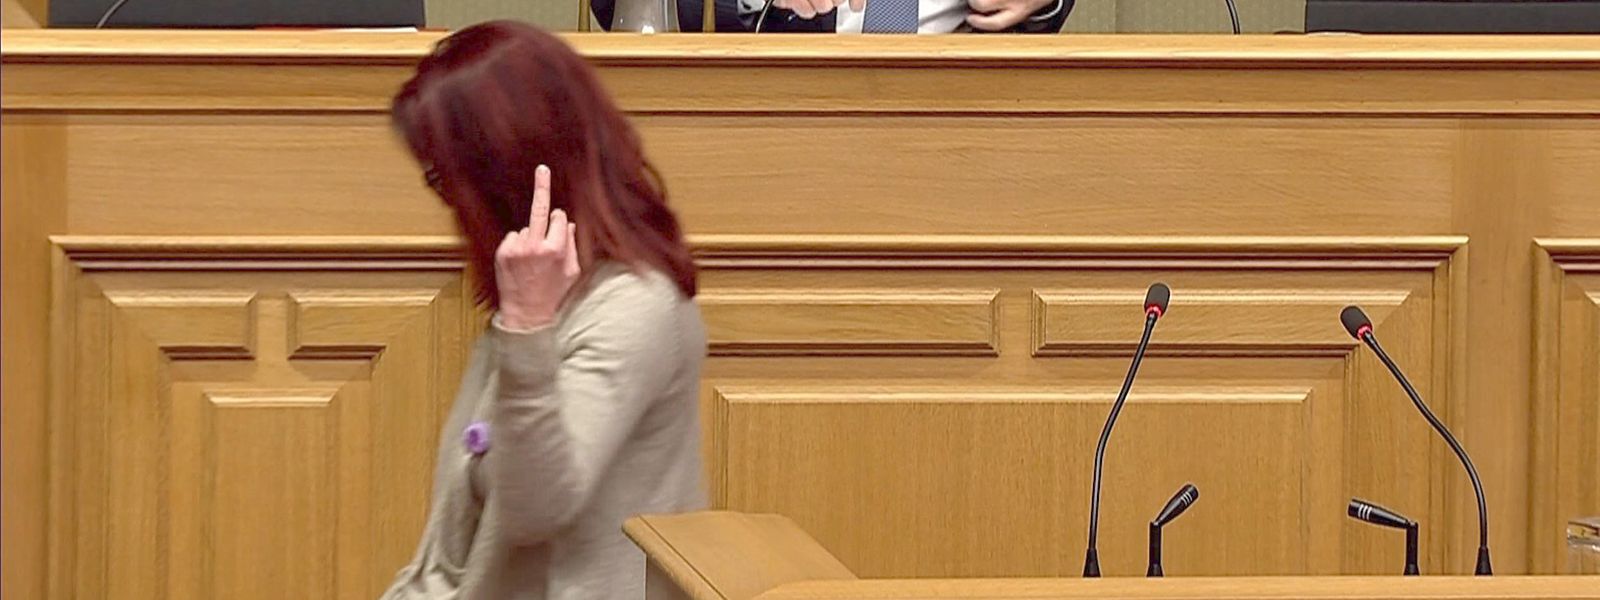 Myriam Cecchetti (Déi Lénk) zeigt nach ihrer Rede zum Tripartite-Abkommen im Parlament dem LSAP-Abgeordneten Dan Kersch den Mittelfinger. 